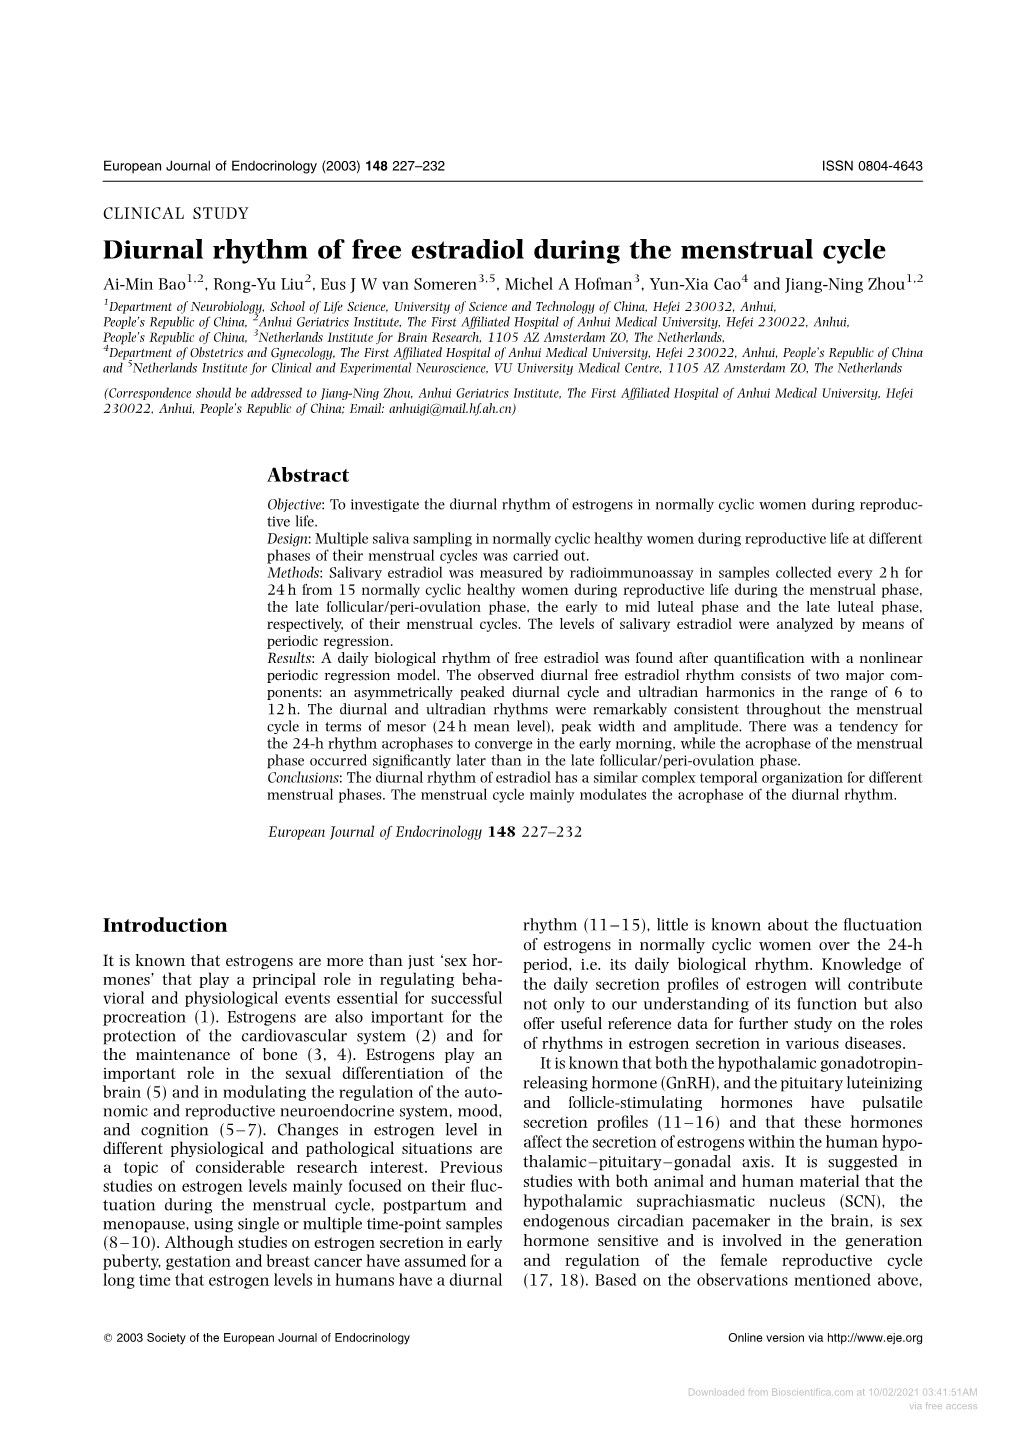 Diurnal Rhythm of Free Estradiol During the Menstrual Cycle